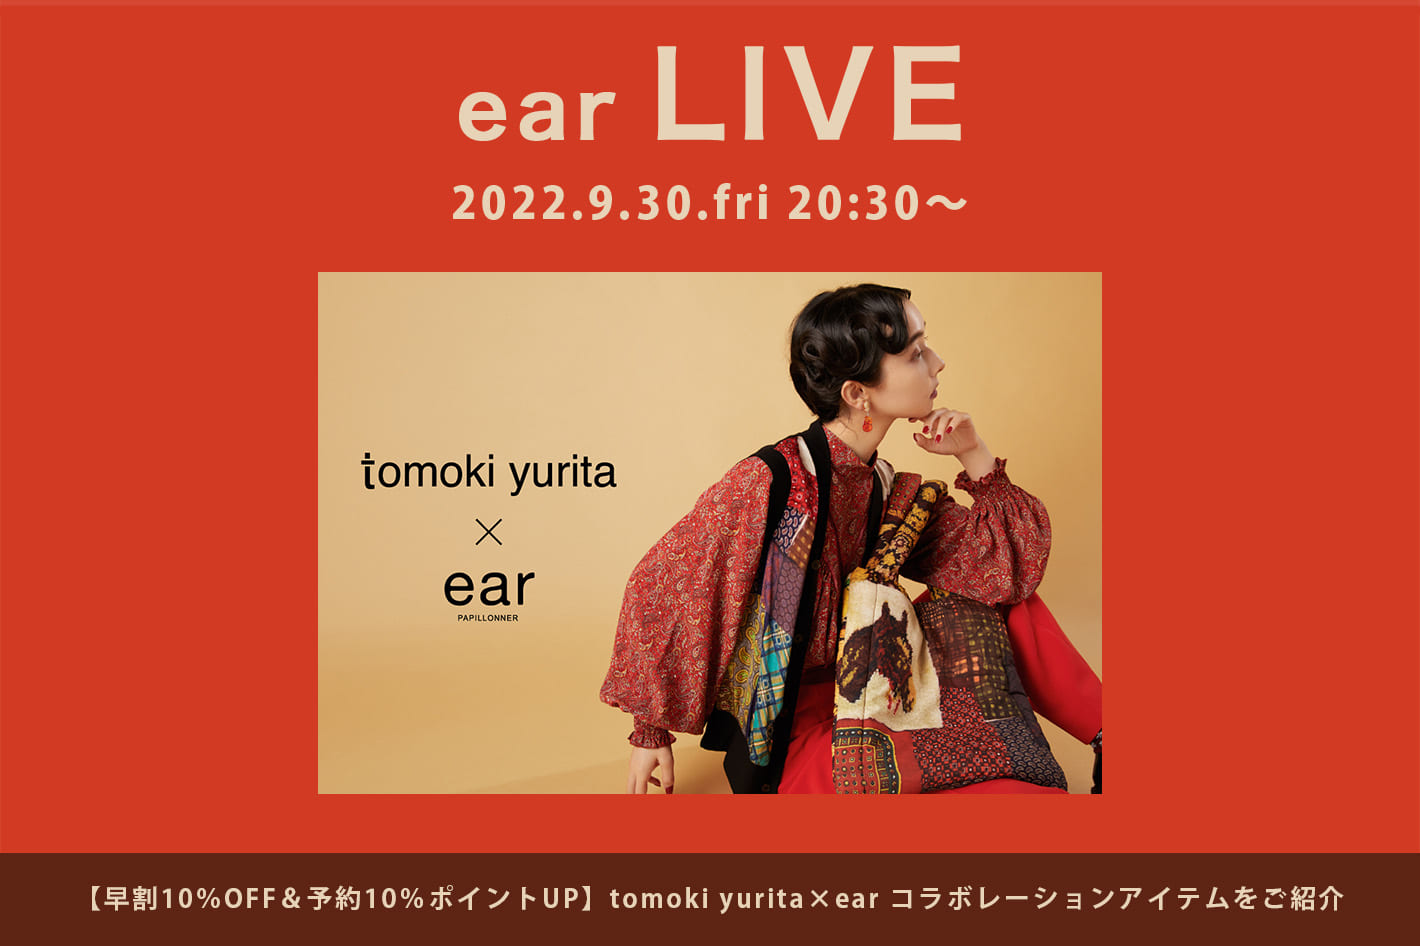 ear PAPILLONNER 9/30 (金) 20:30～ライブ配信 <br>tomoki yurita × earのコラボレーションアイテムをご紹介！